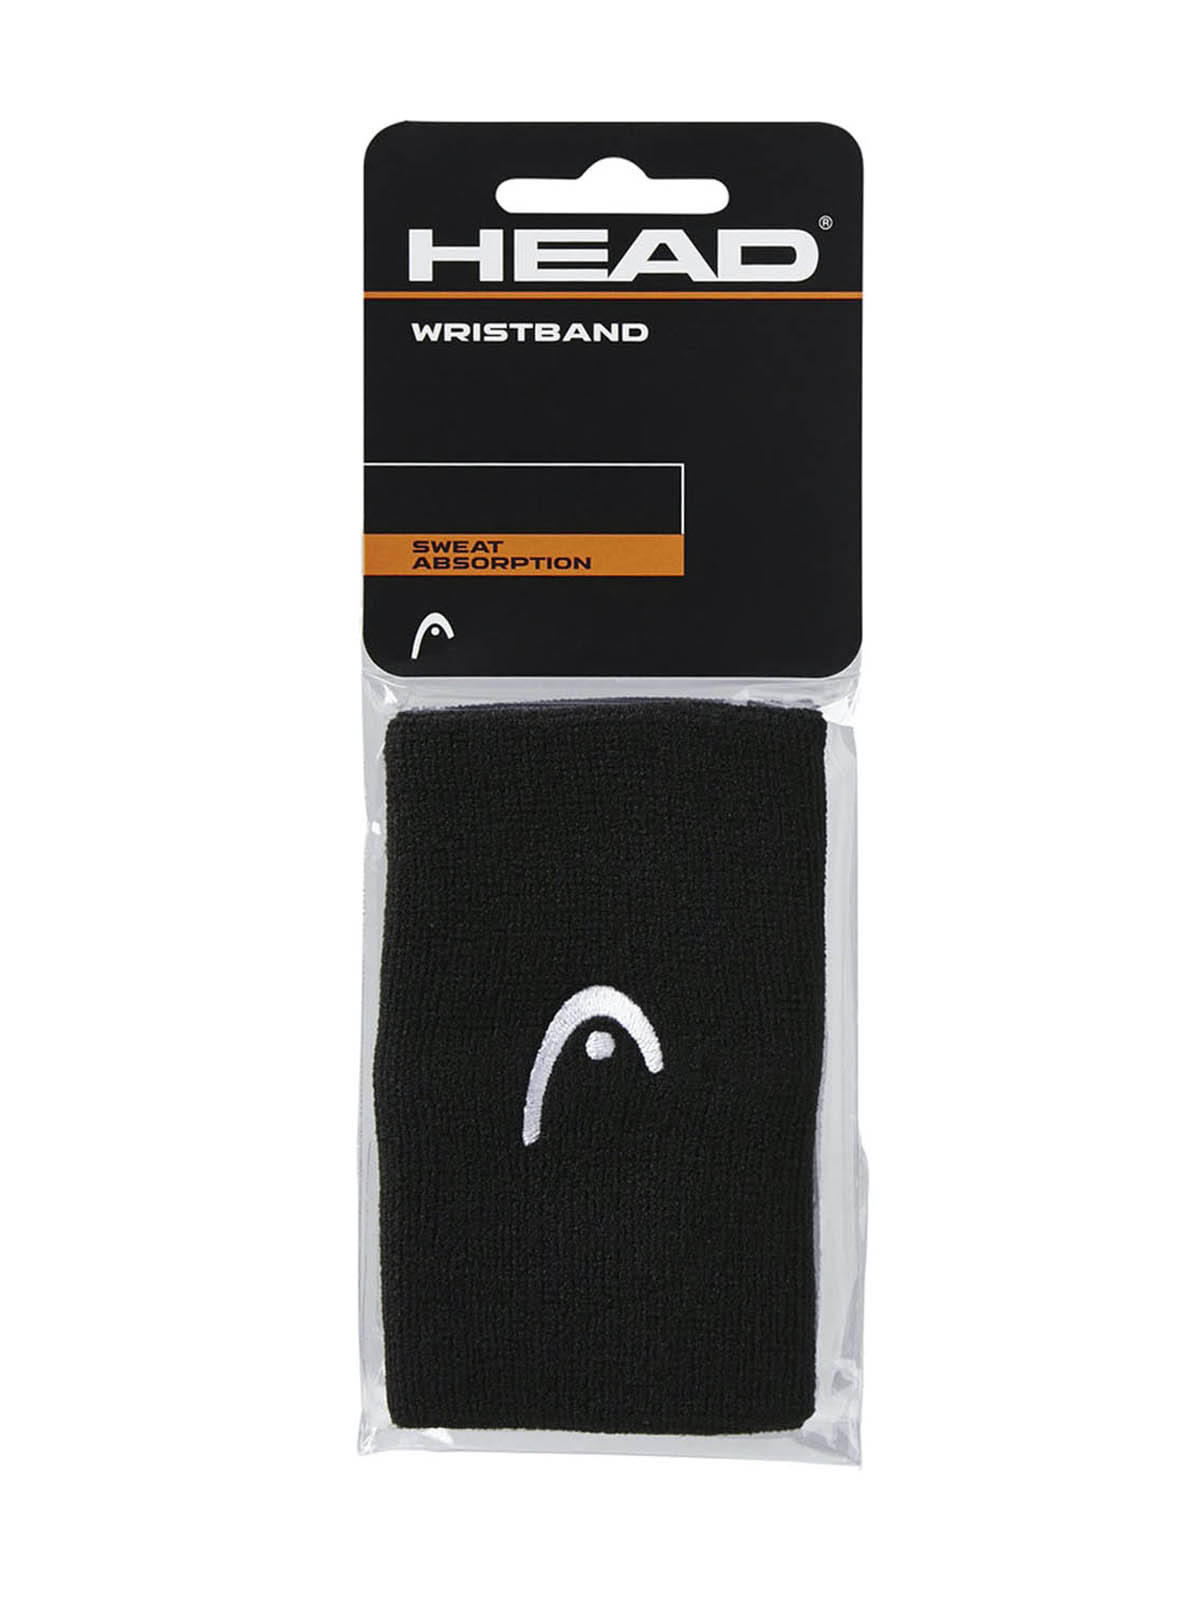 Head Unisex Wristbands - 5" Wristband - Black